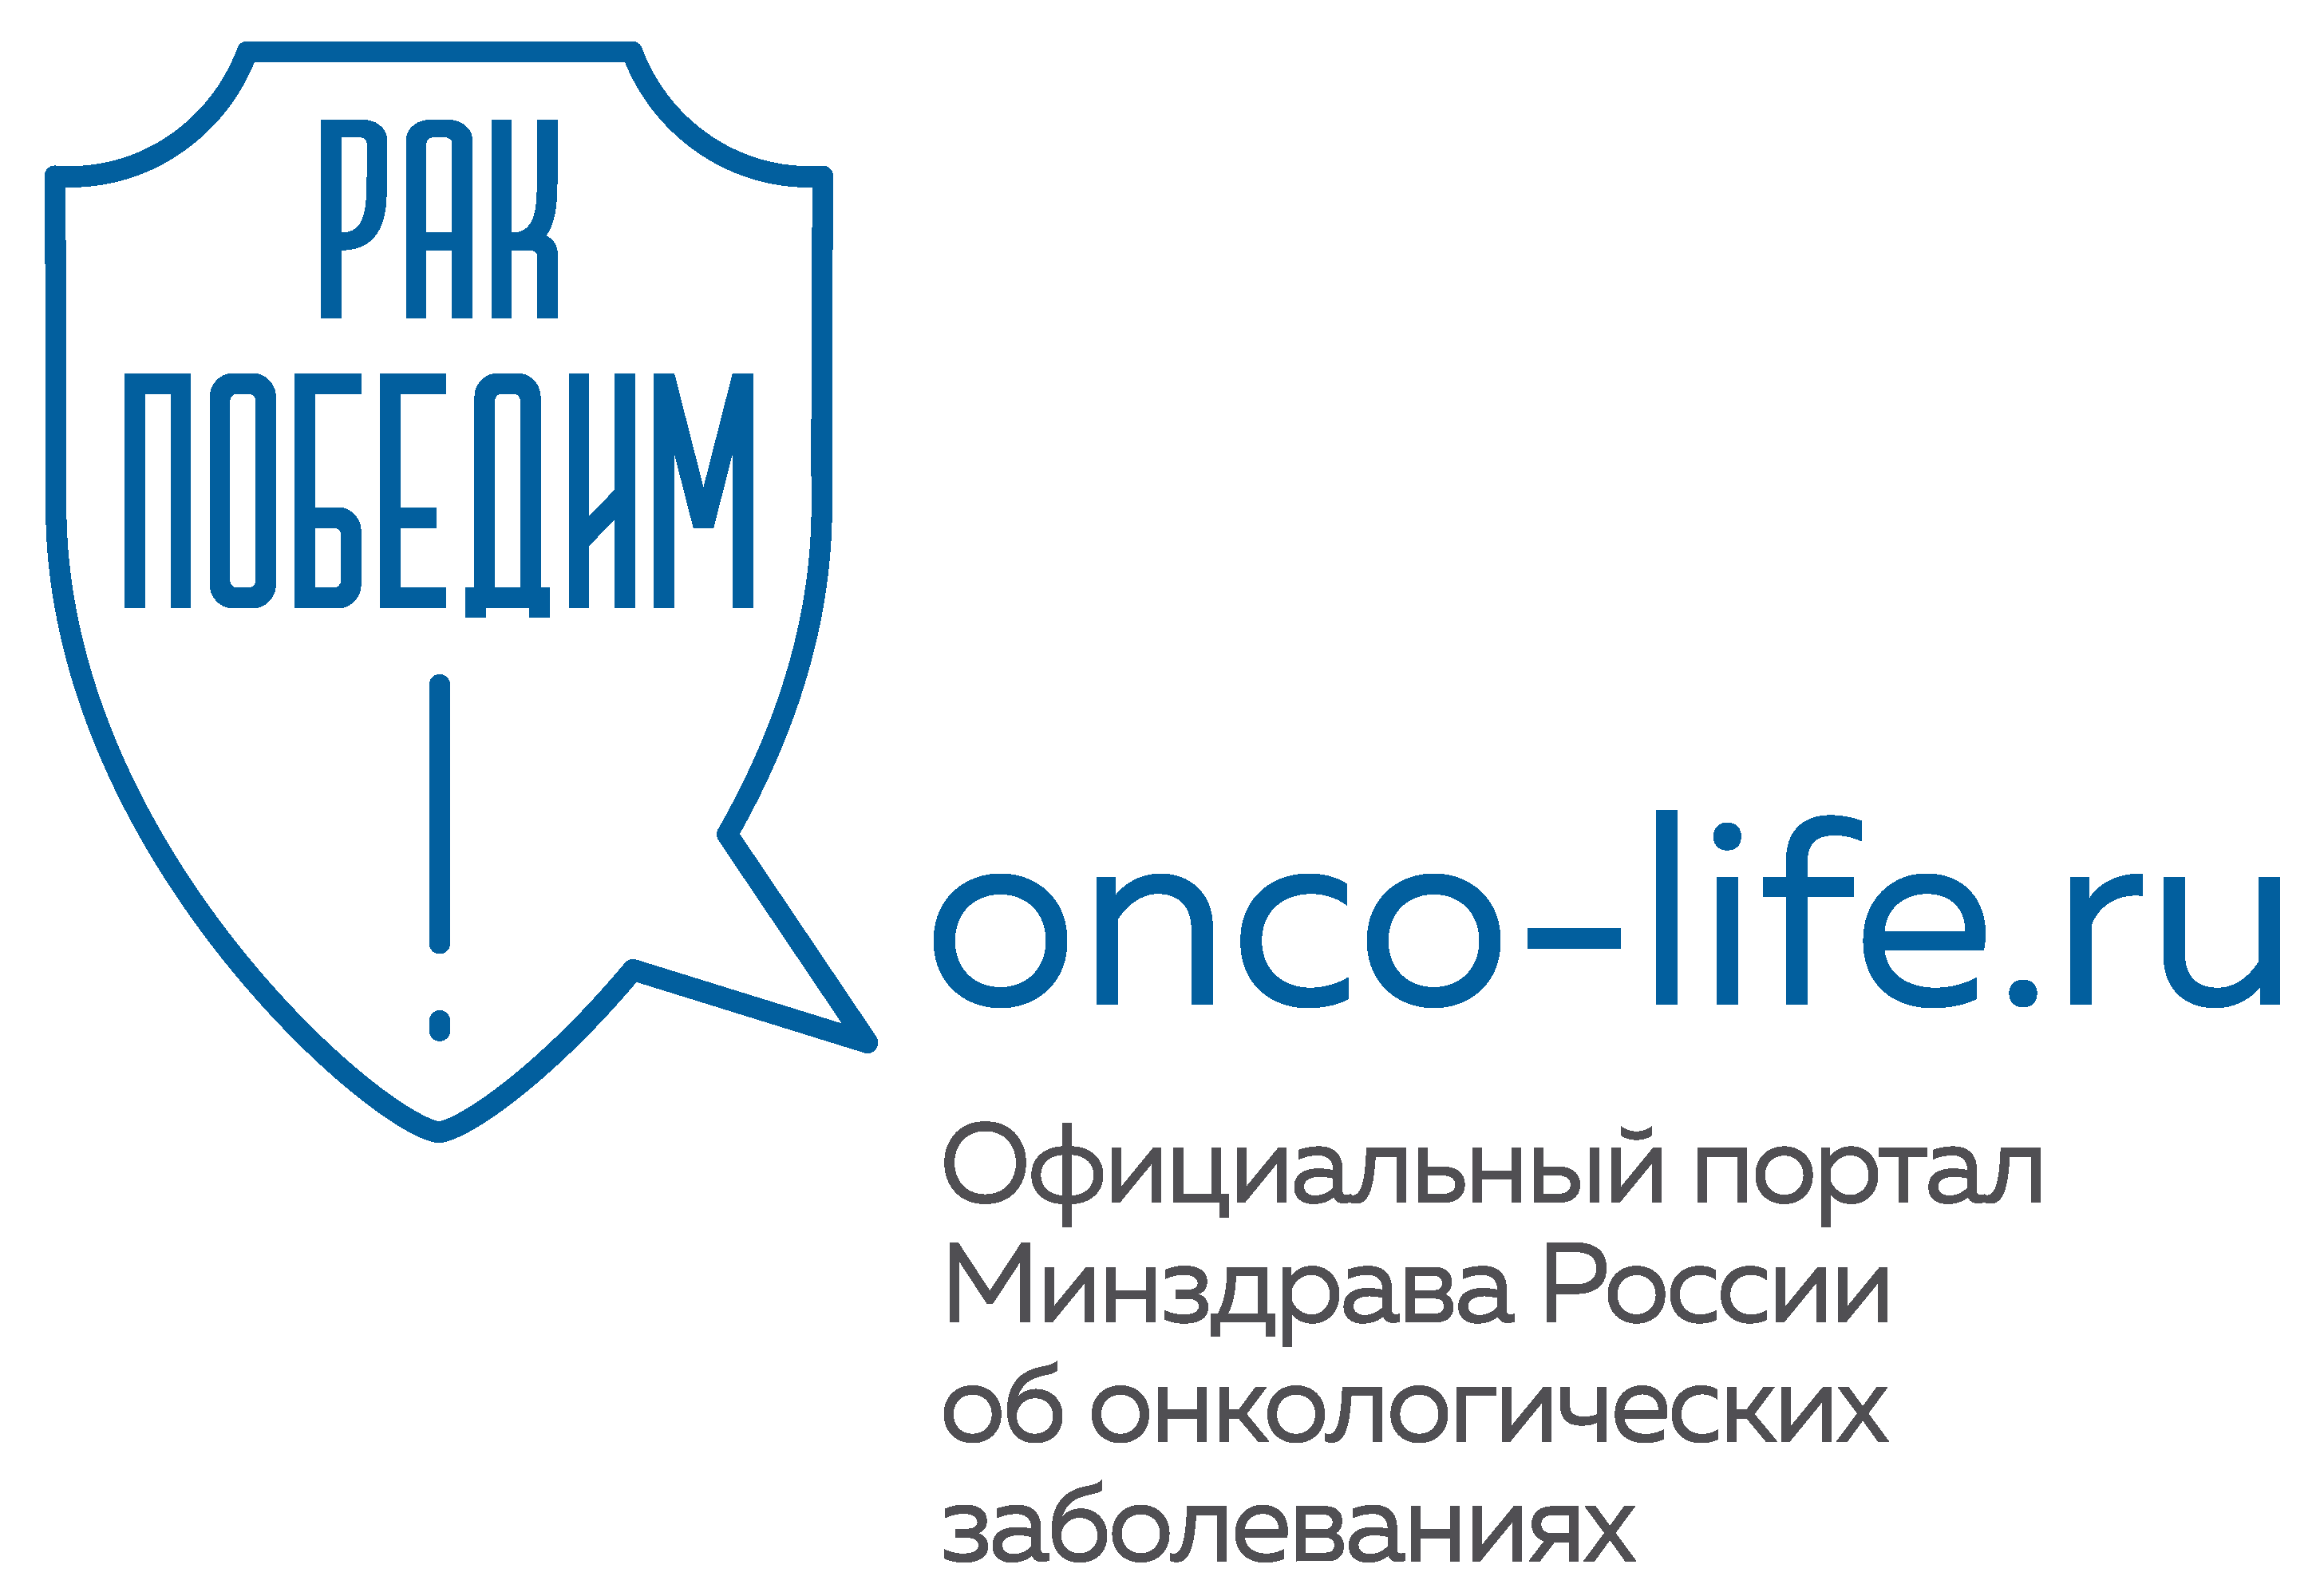 Onco-life.ru.